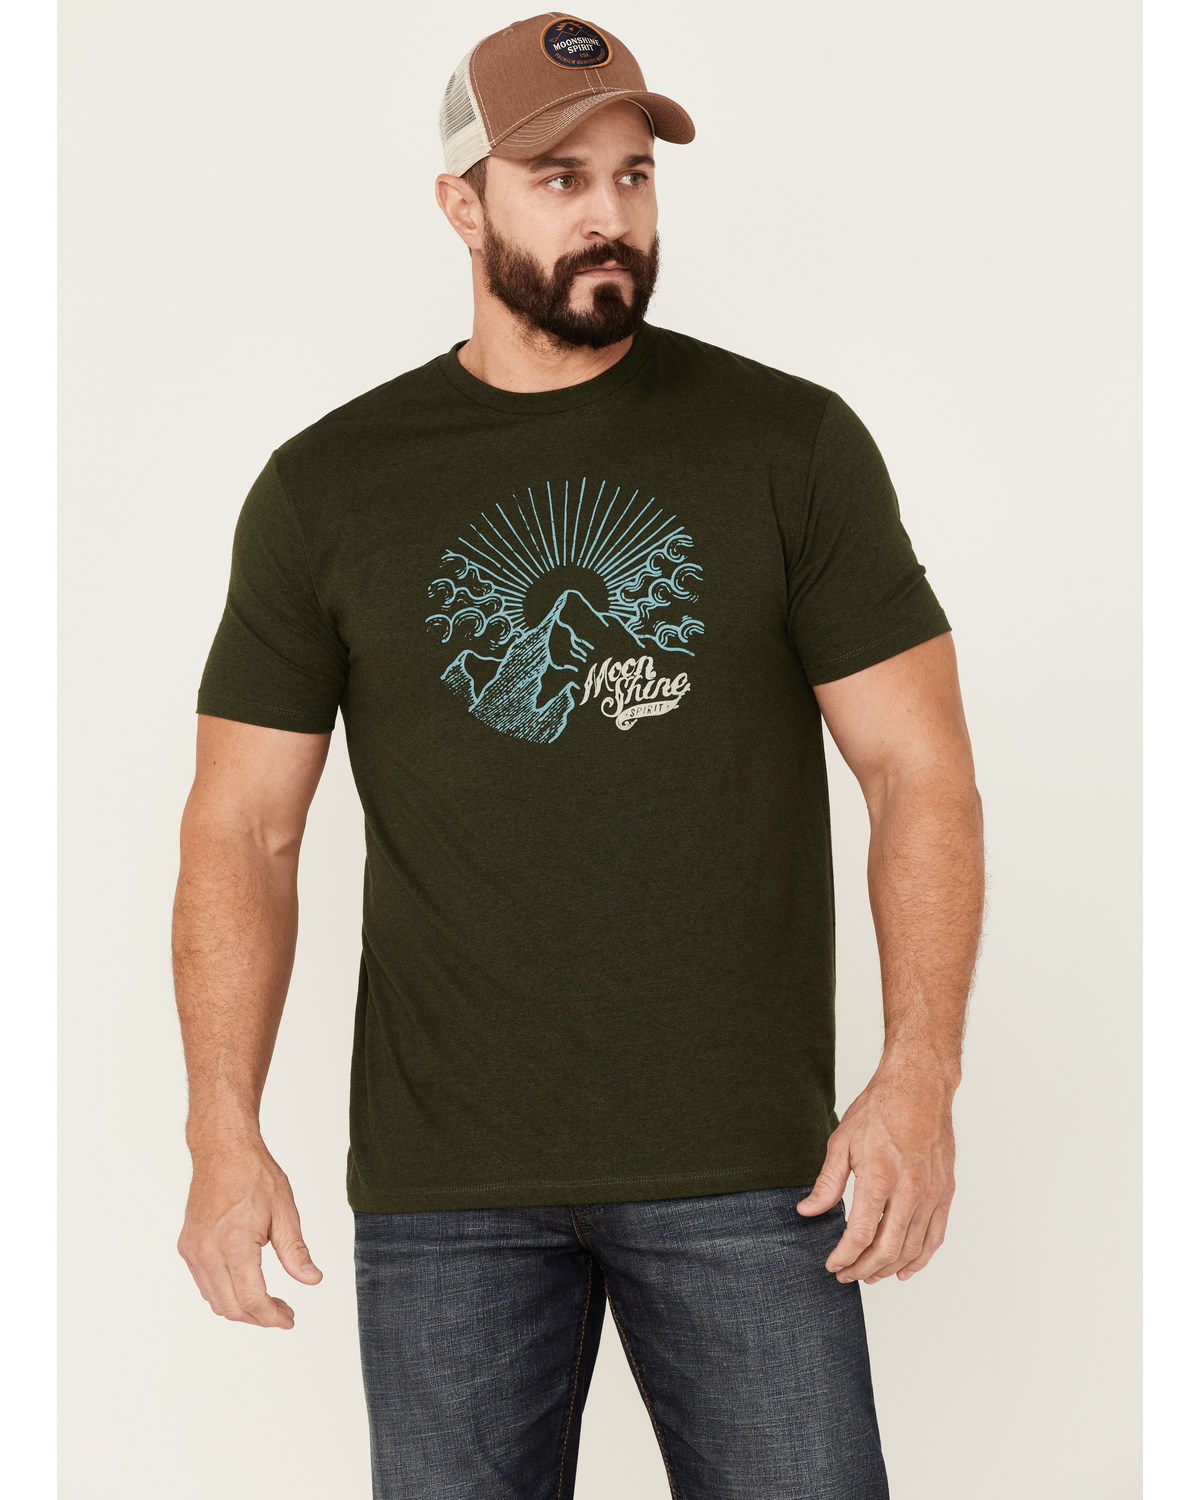 Moonshine Spirit Men's Sun Mountain Graphic Short Sleeve Moss Green T-Shirt